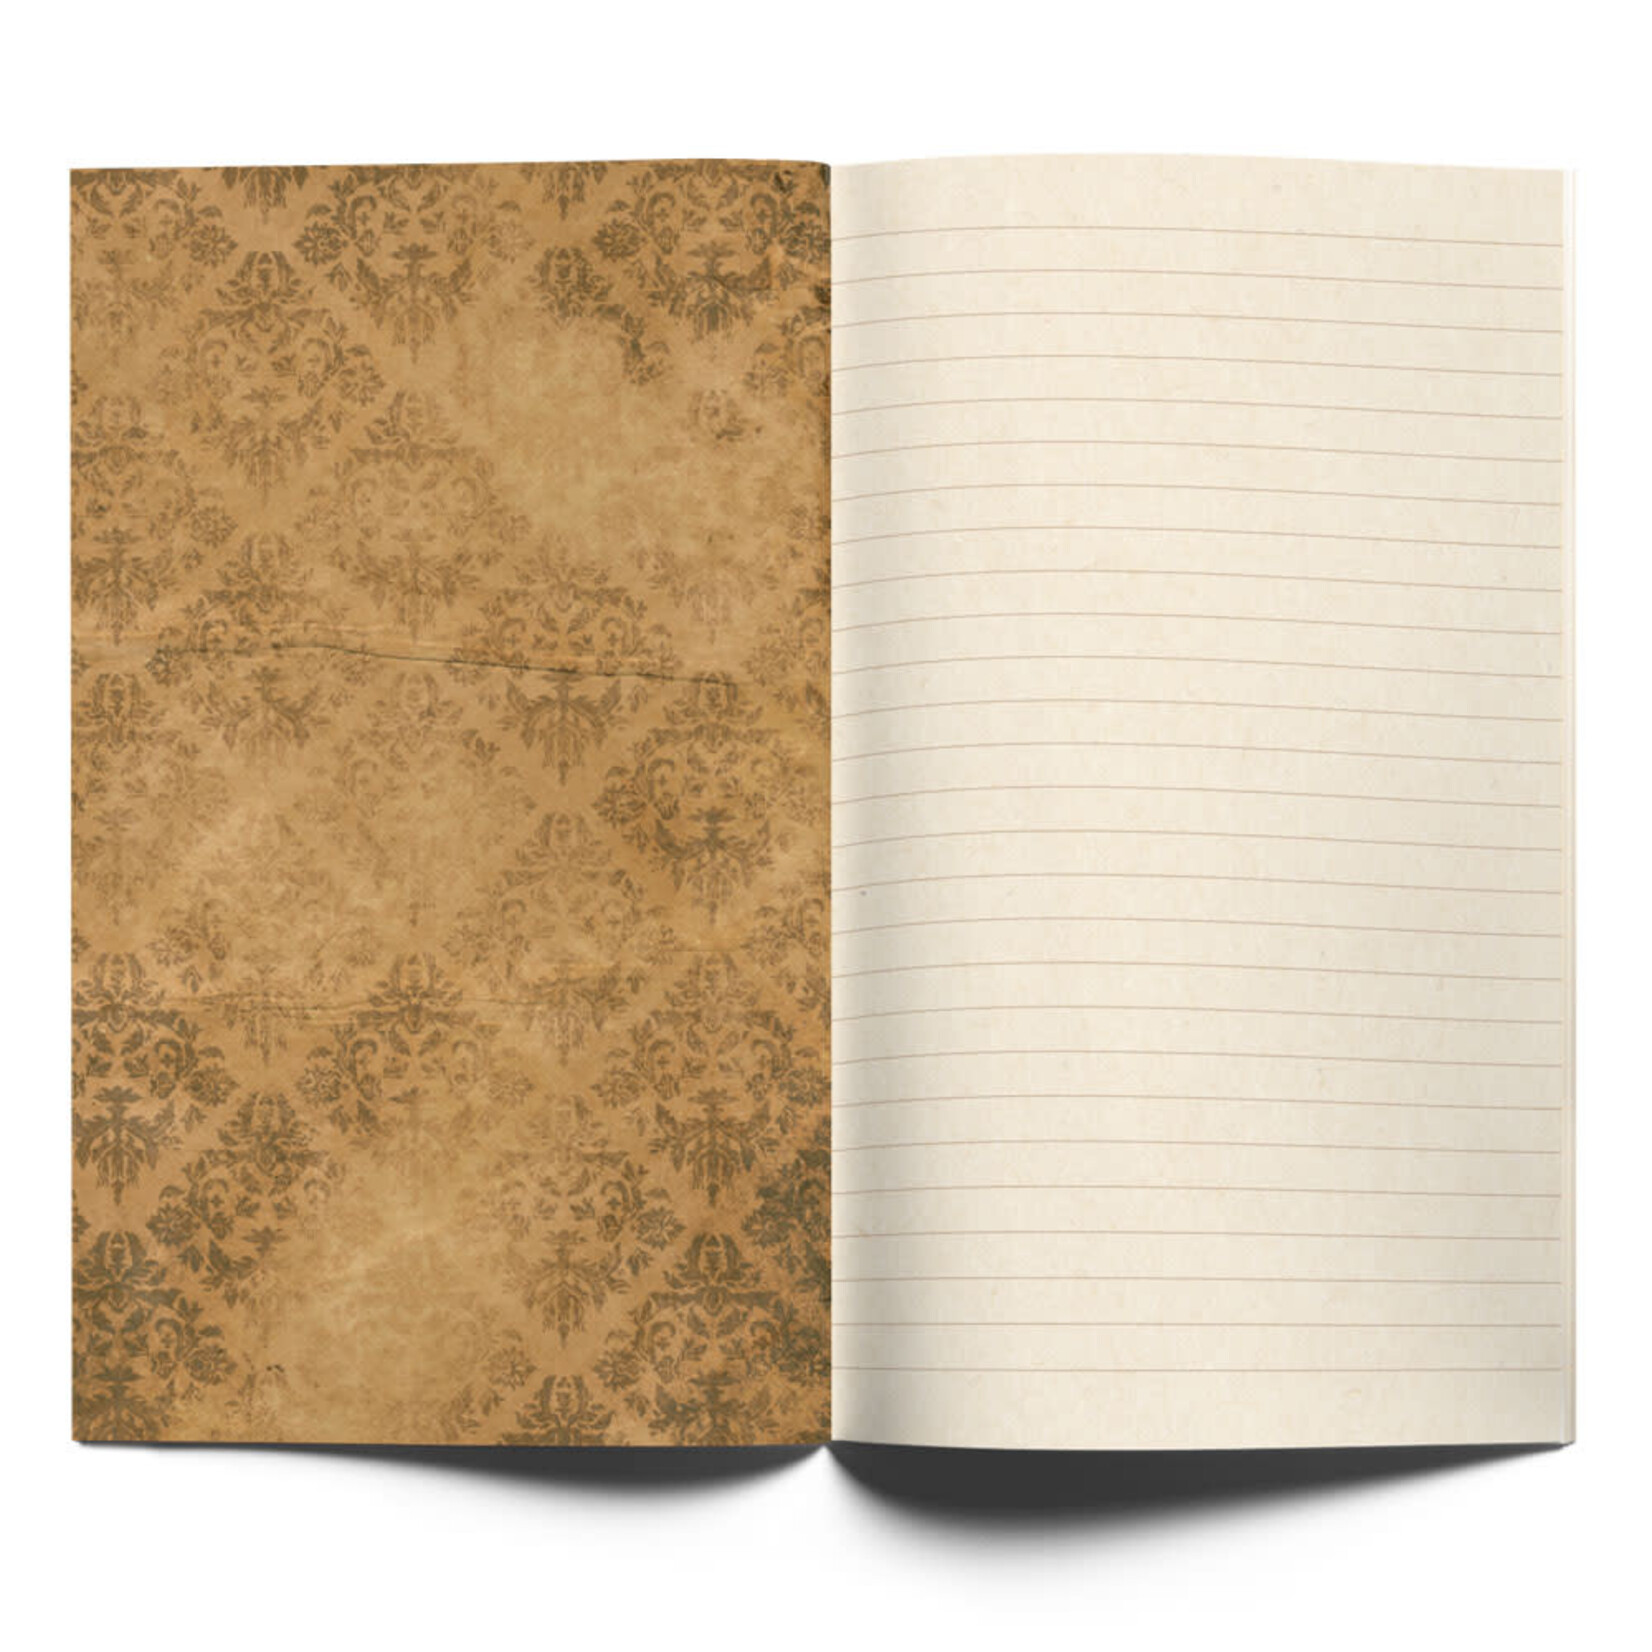 David Arms Wren Softcover Notebook